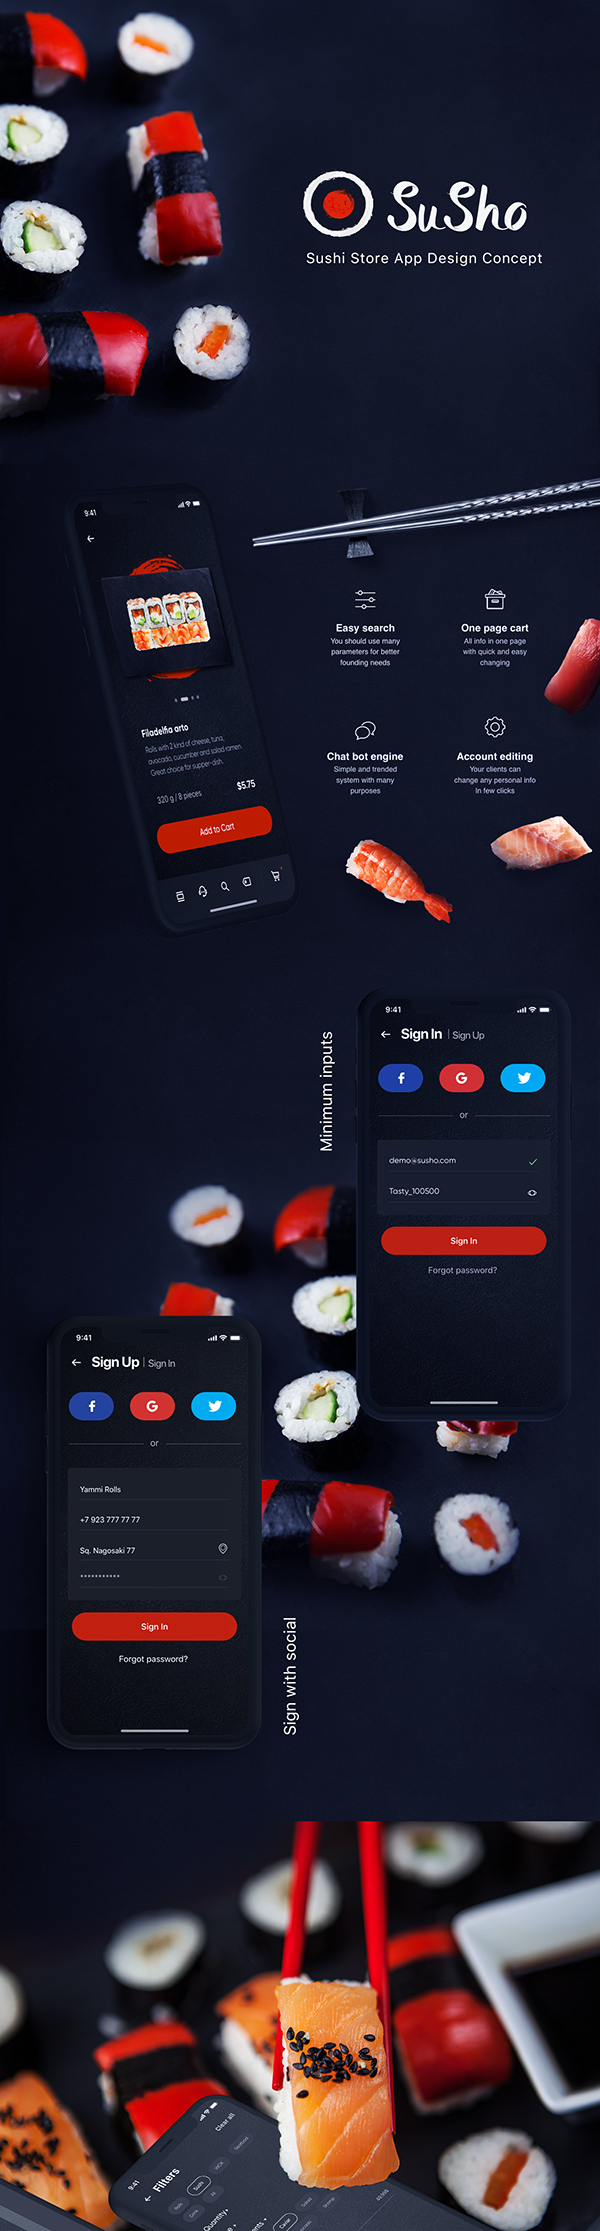 SuSho - Sushi shop App design concept